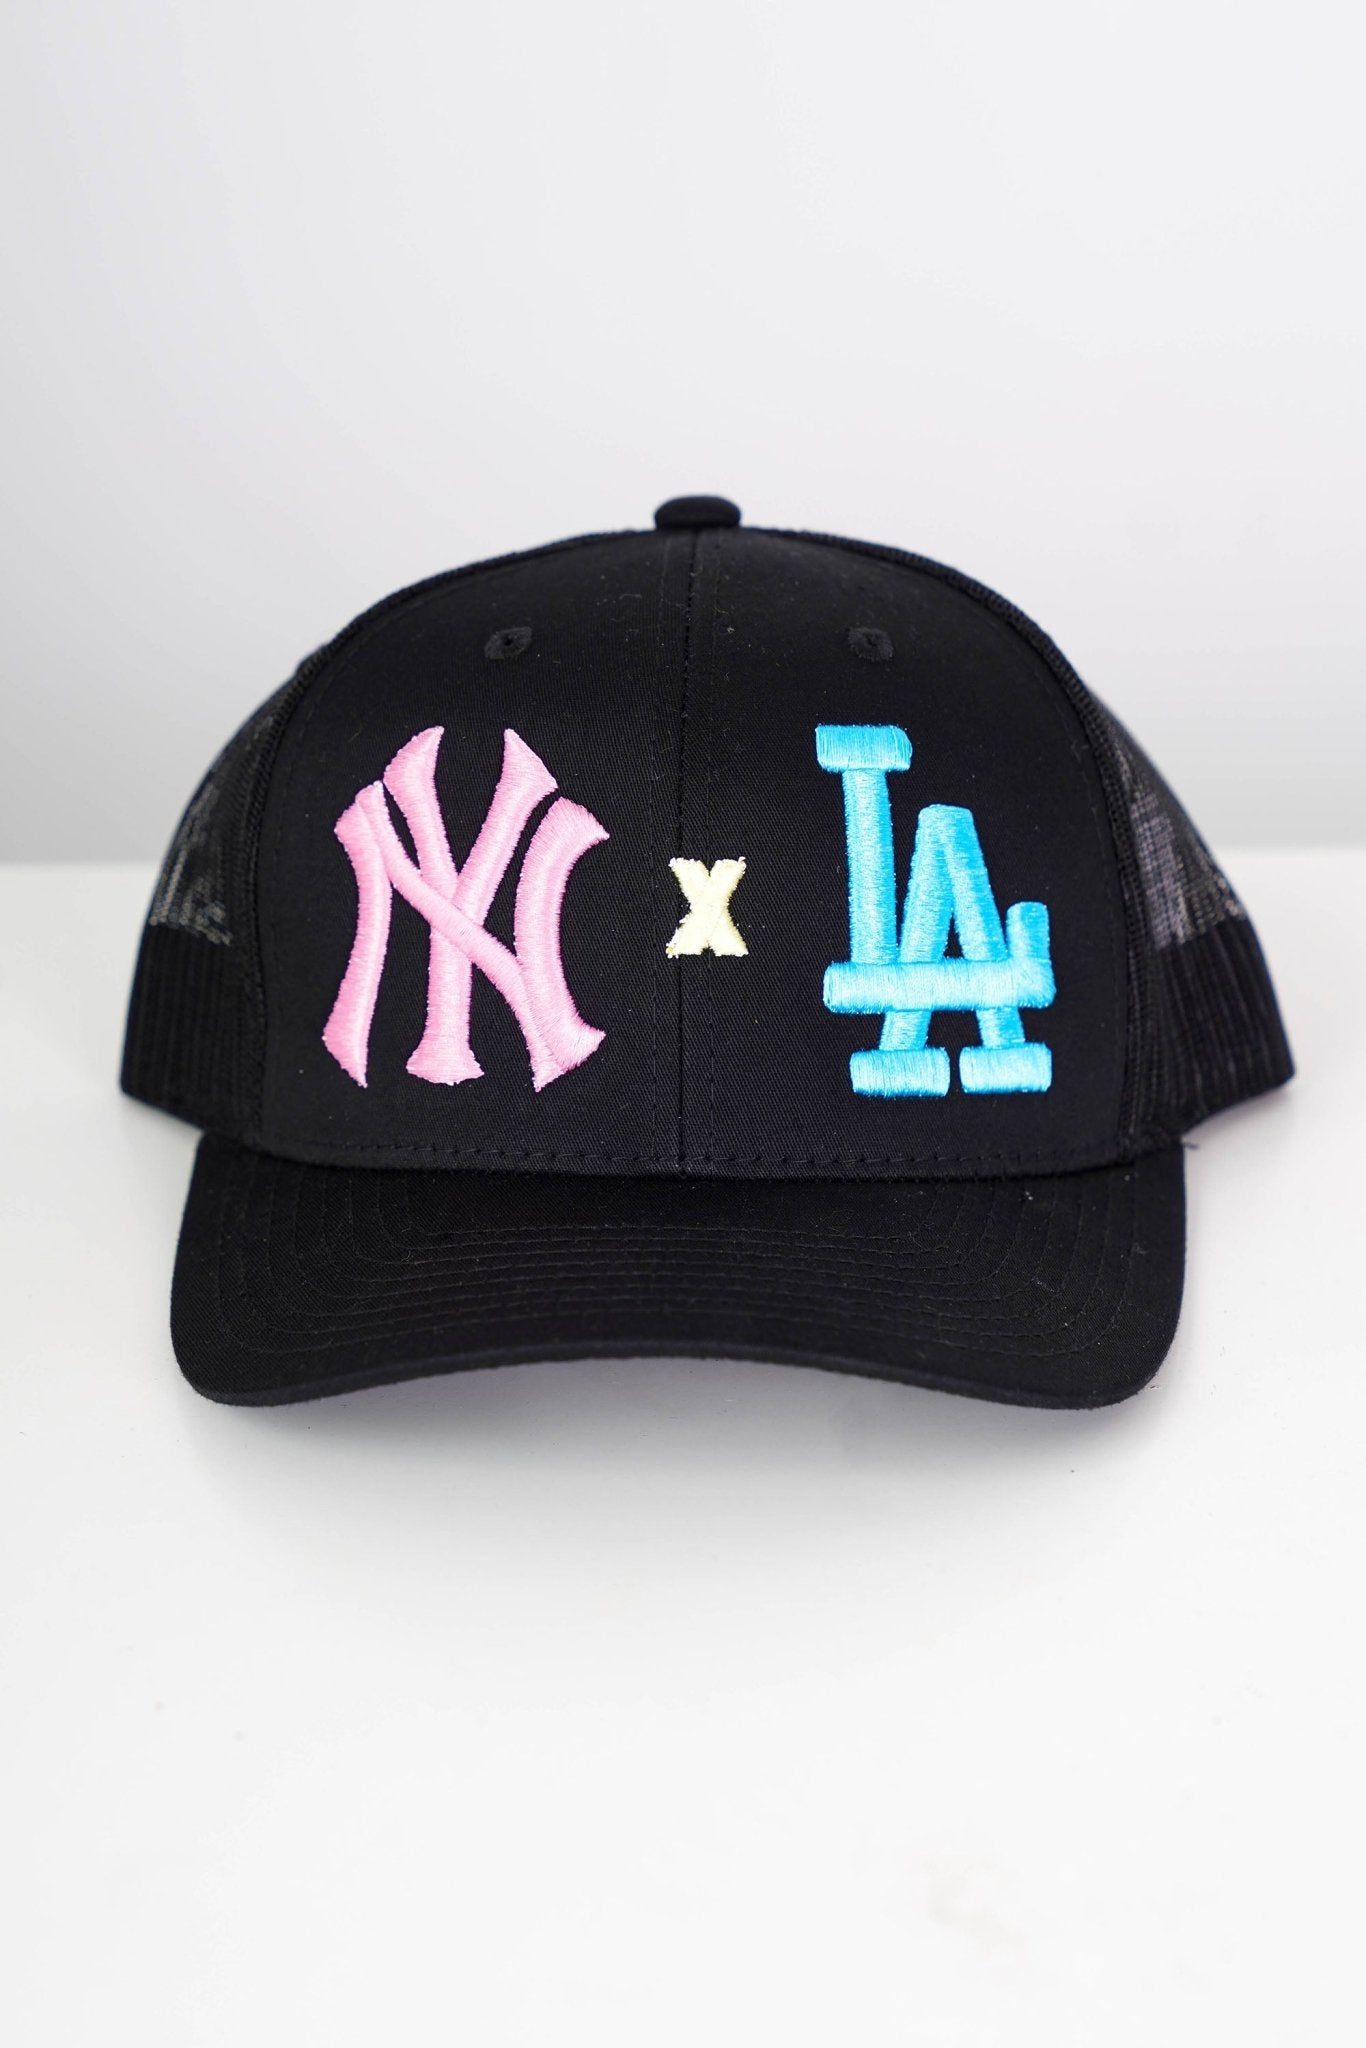 Black Pink NY X Blue LA Trucker Hat , Men's hat, Trucker Cap